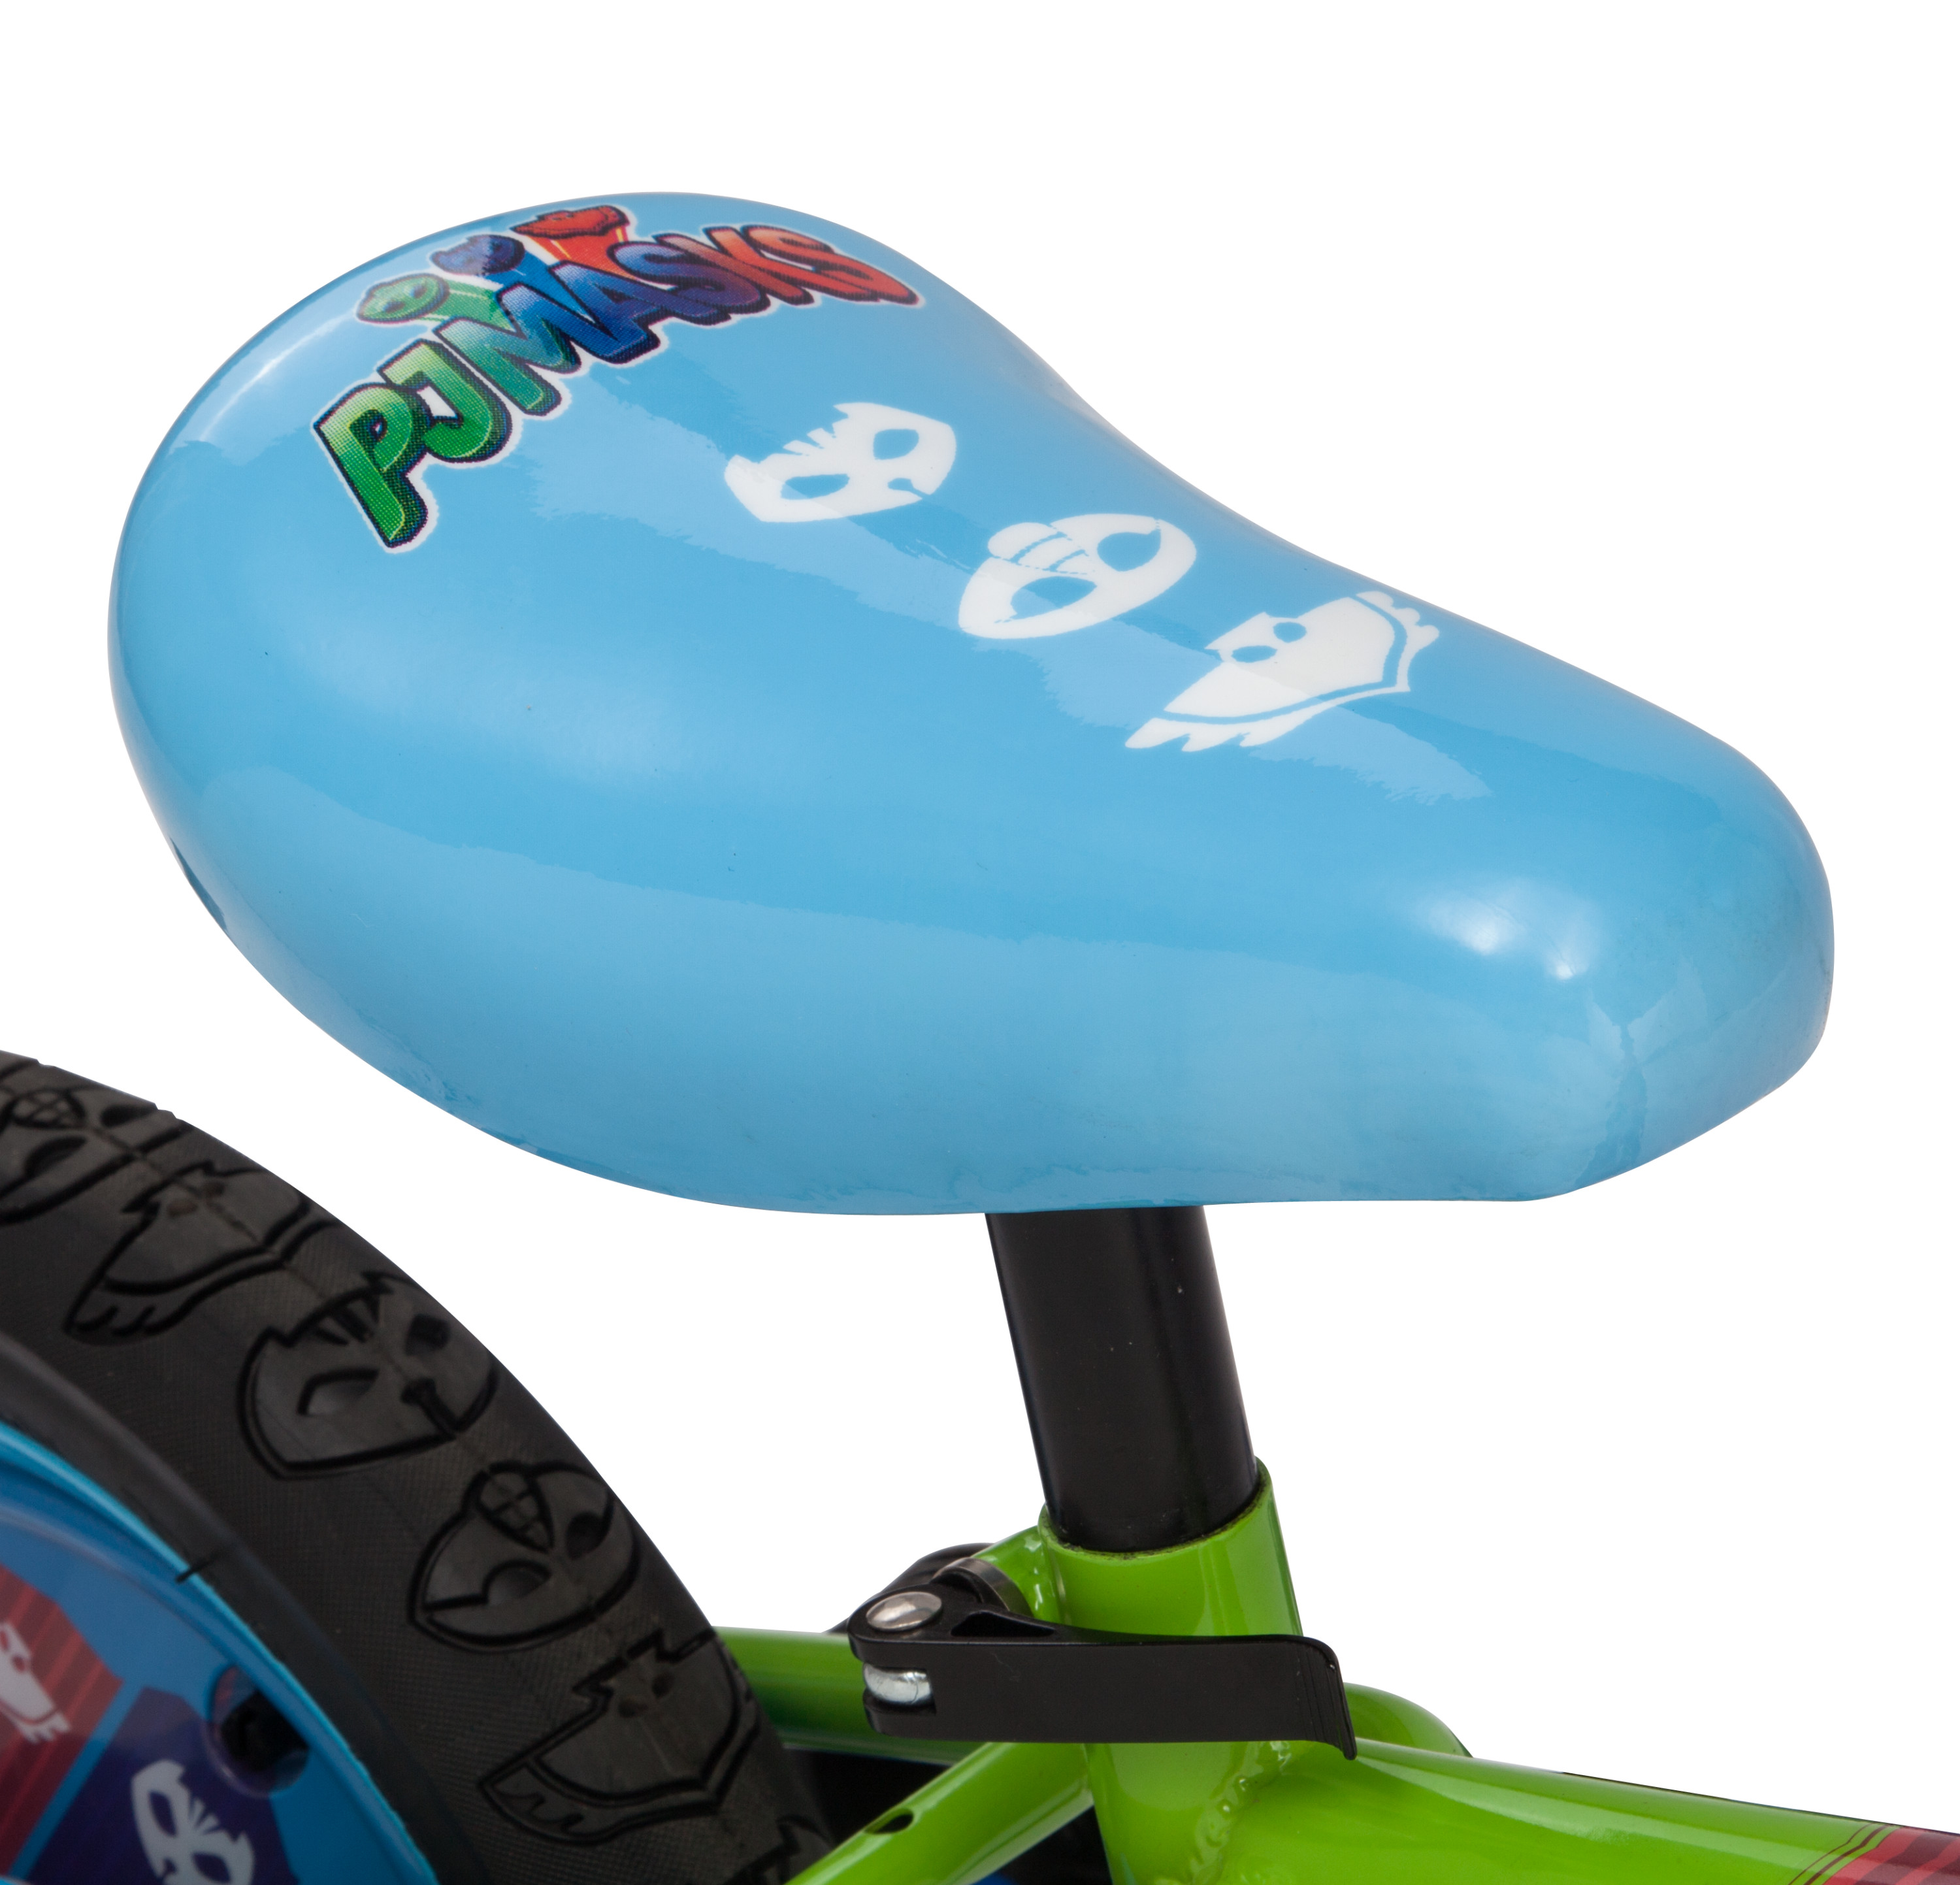 E1 PJ Masks: Catboy Kids Bike, 12-inch wheels, blue, on Disney Junior - image 5 of 7